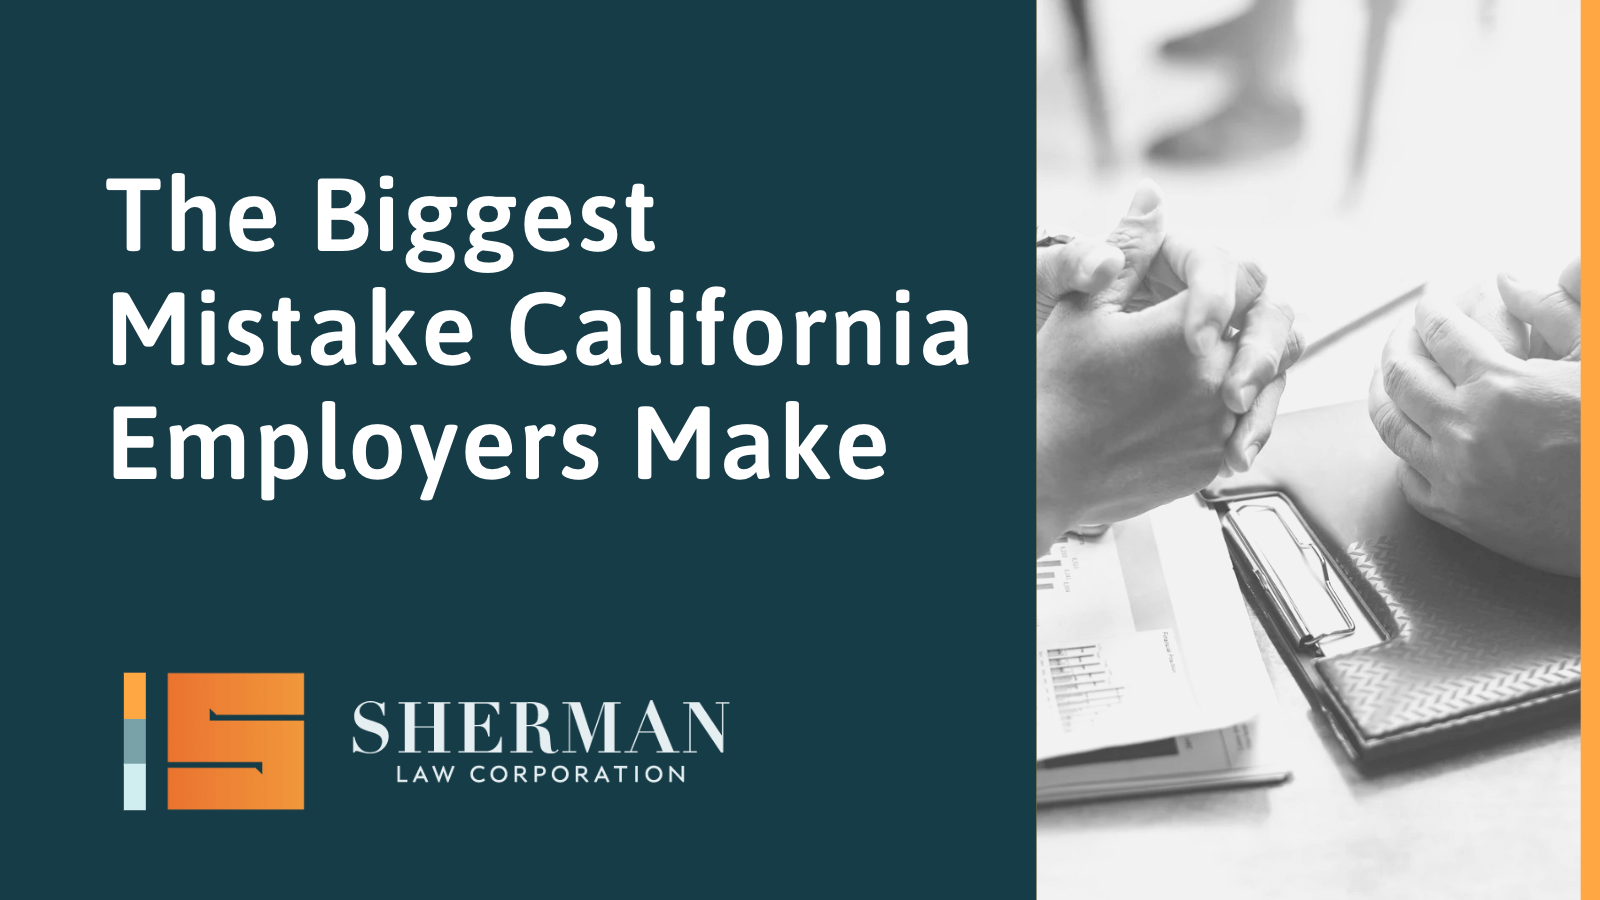 The Biggest Mistake California Employers Make - callifornia employment law - sherman law corporation